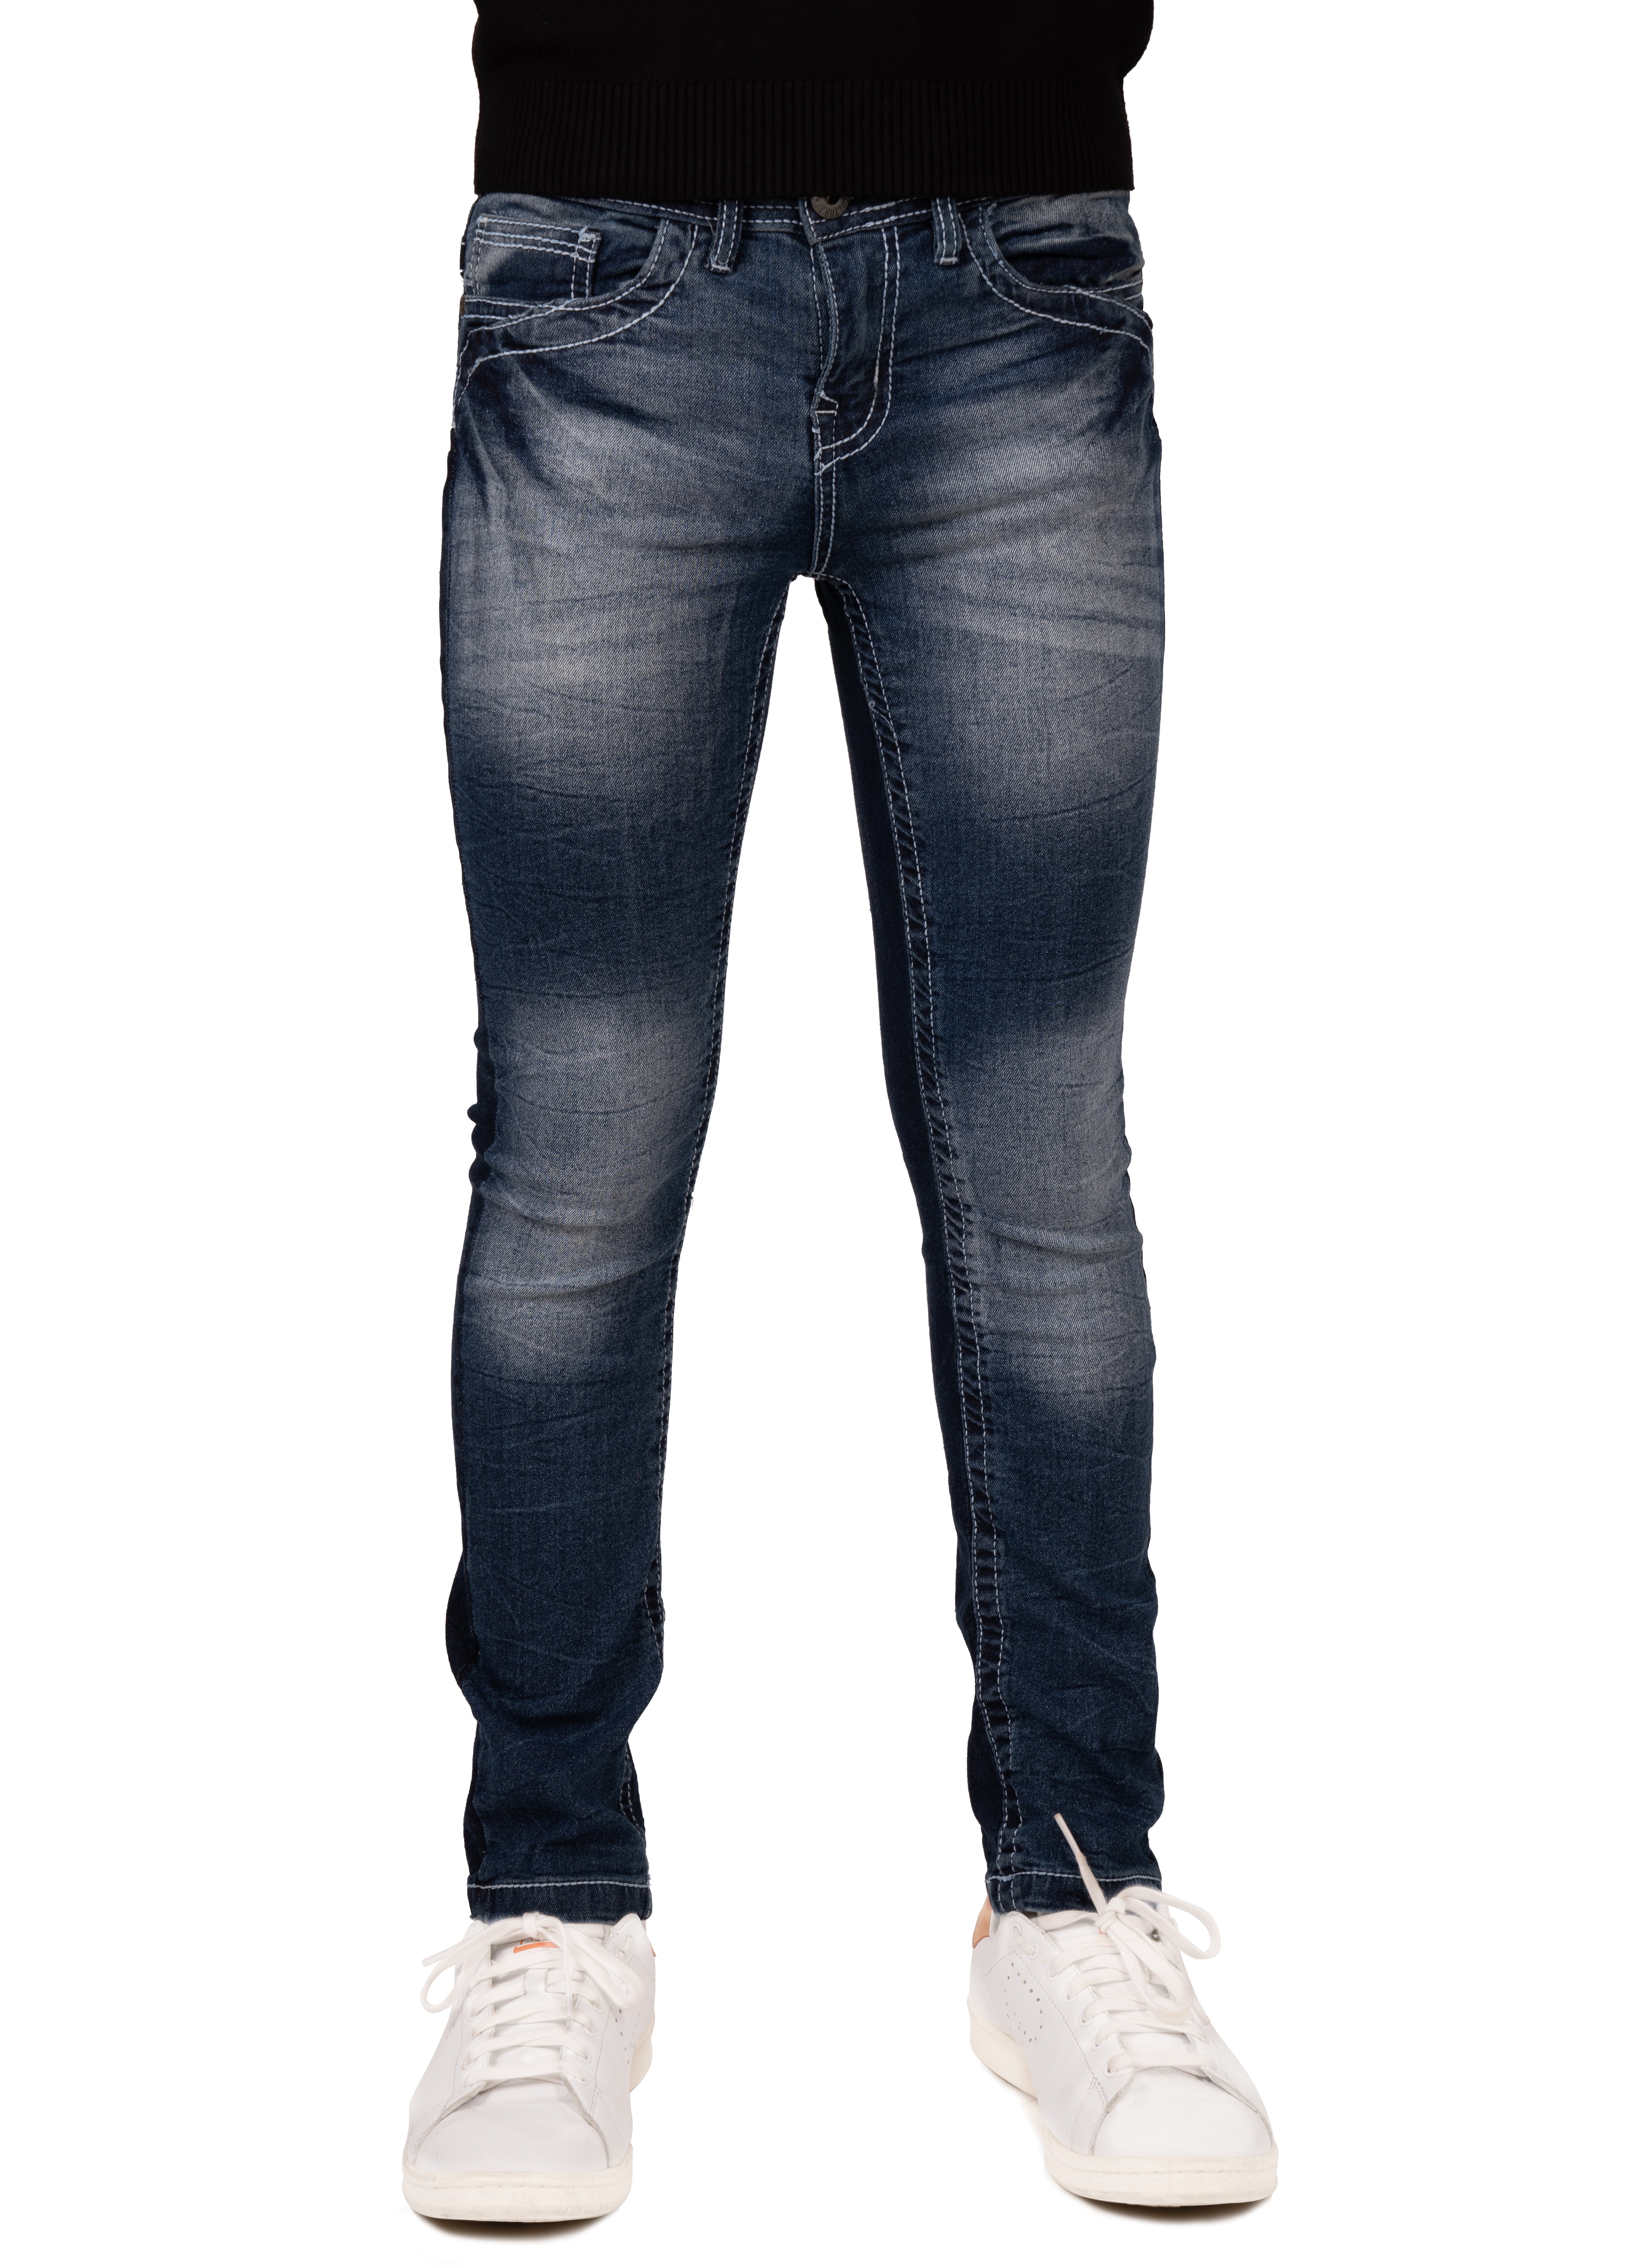 CULTURA Skinny Jeans for Little Boys Slim Wash Stretch Comfy Denim Pants,  Age 3-7, Blue Thick Stitch, Size 5